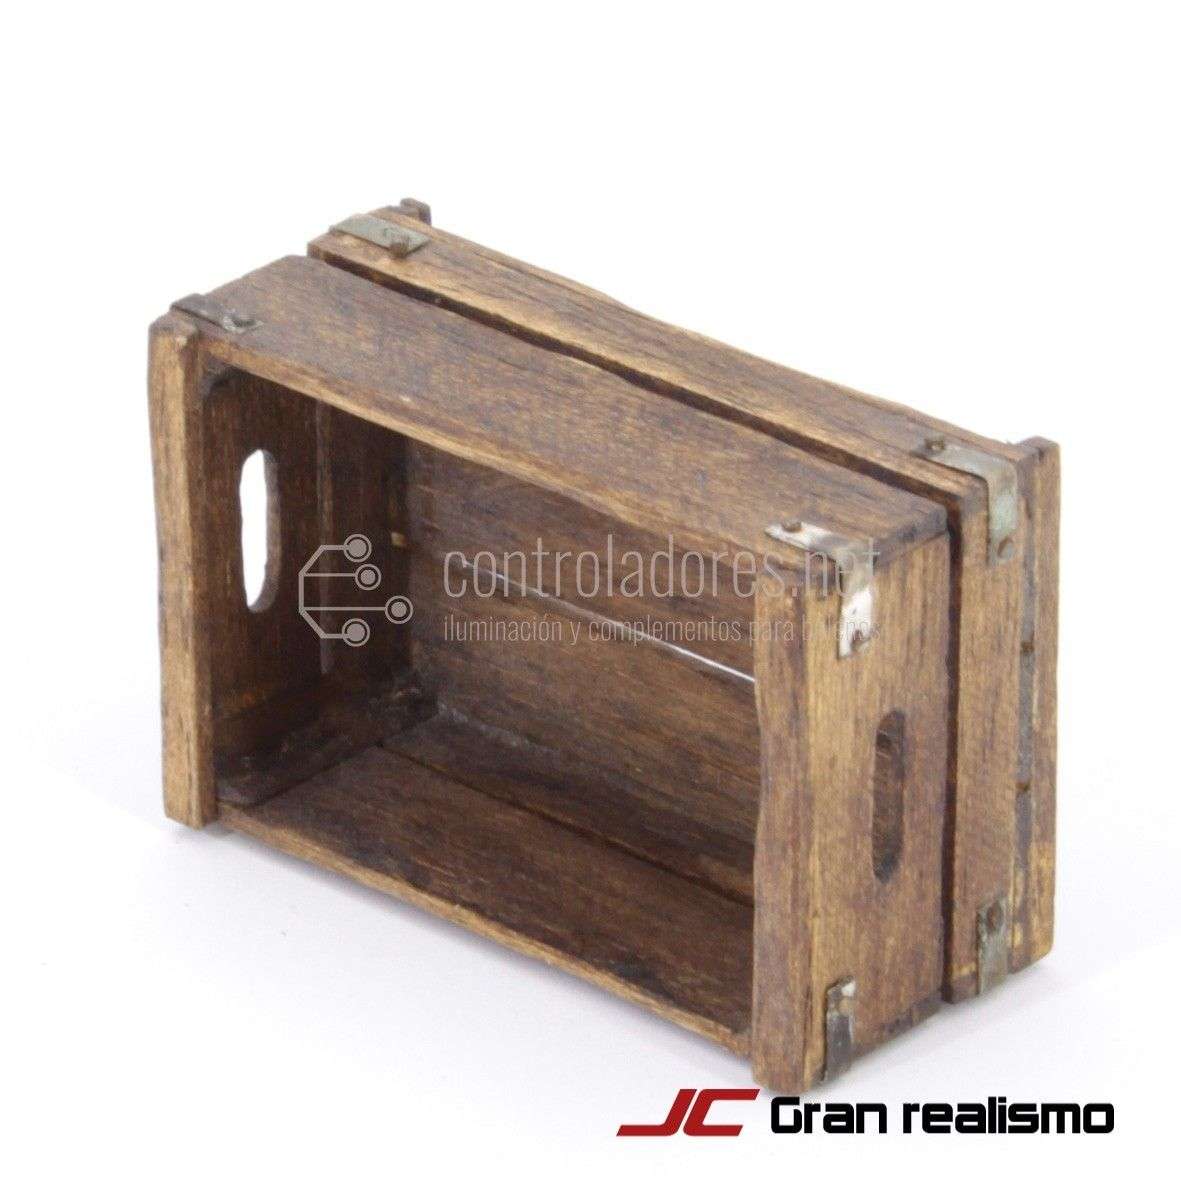 Fruit box invecchiato6,50x4,3x3 cm